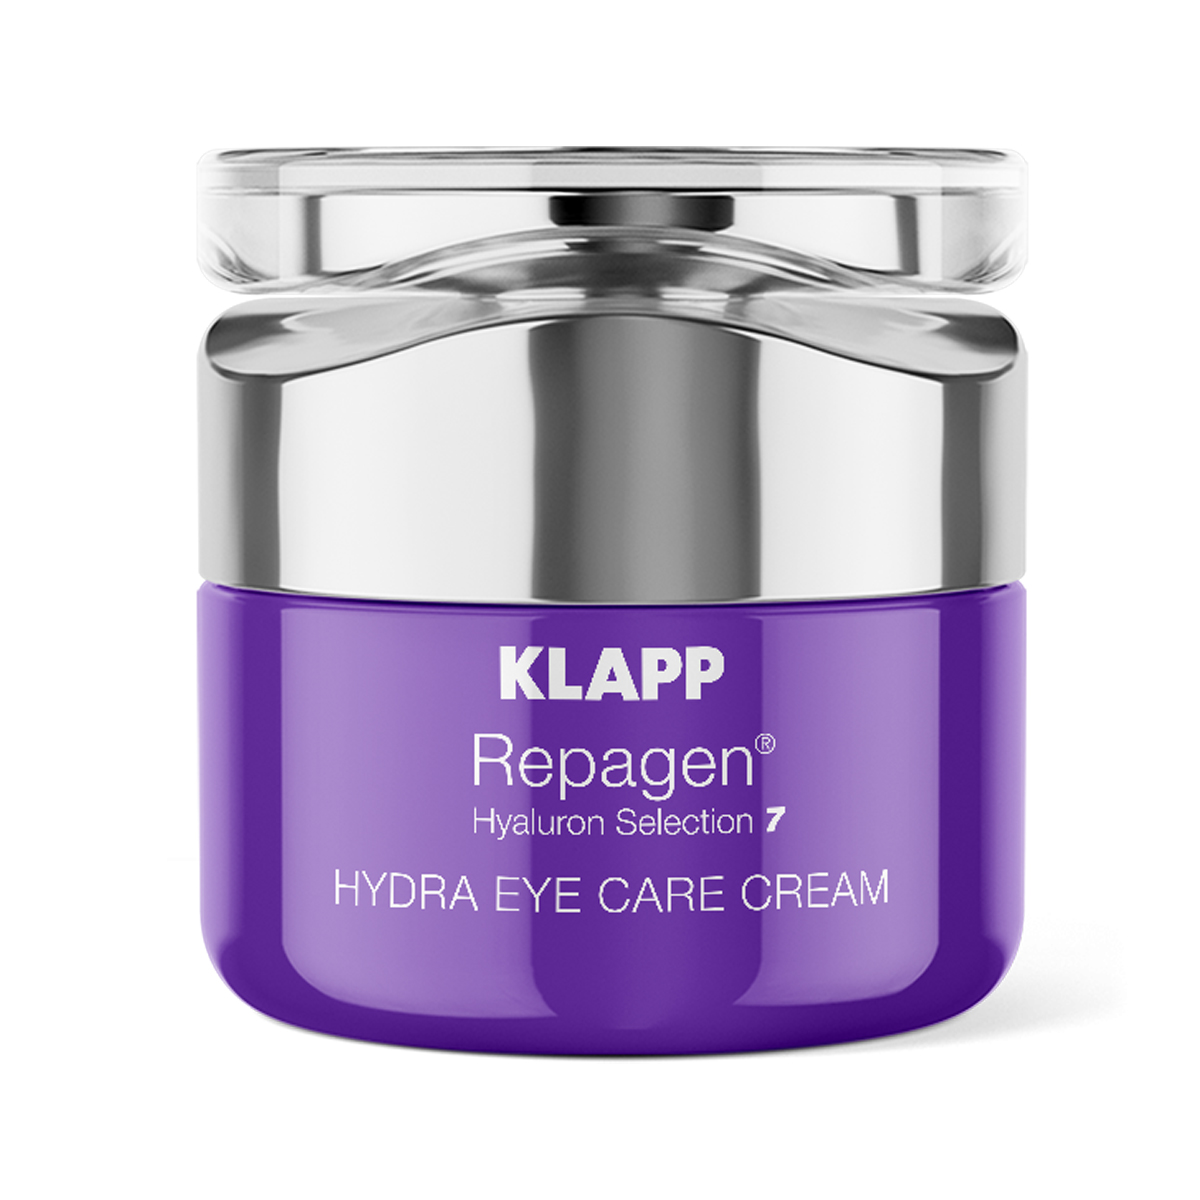 KLAPP Repagen Hyaluron Selection 7 Hydra Eye Care Cream 20 ml